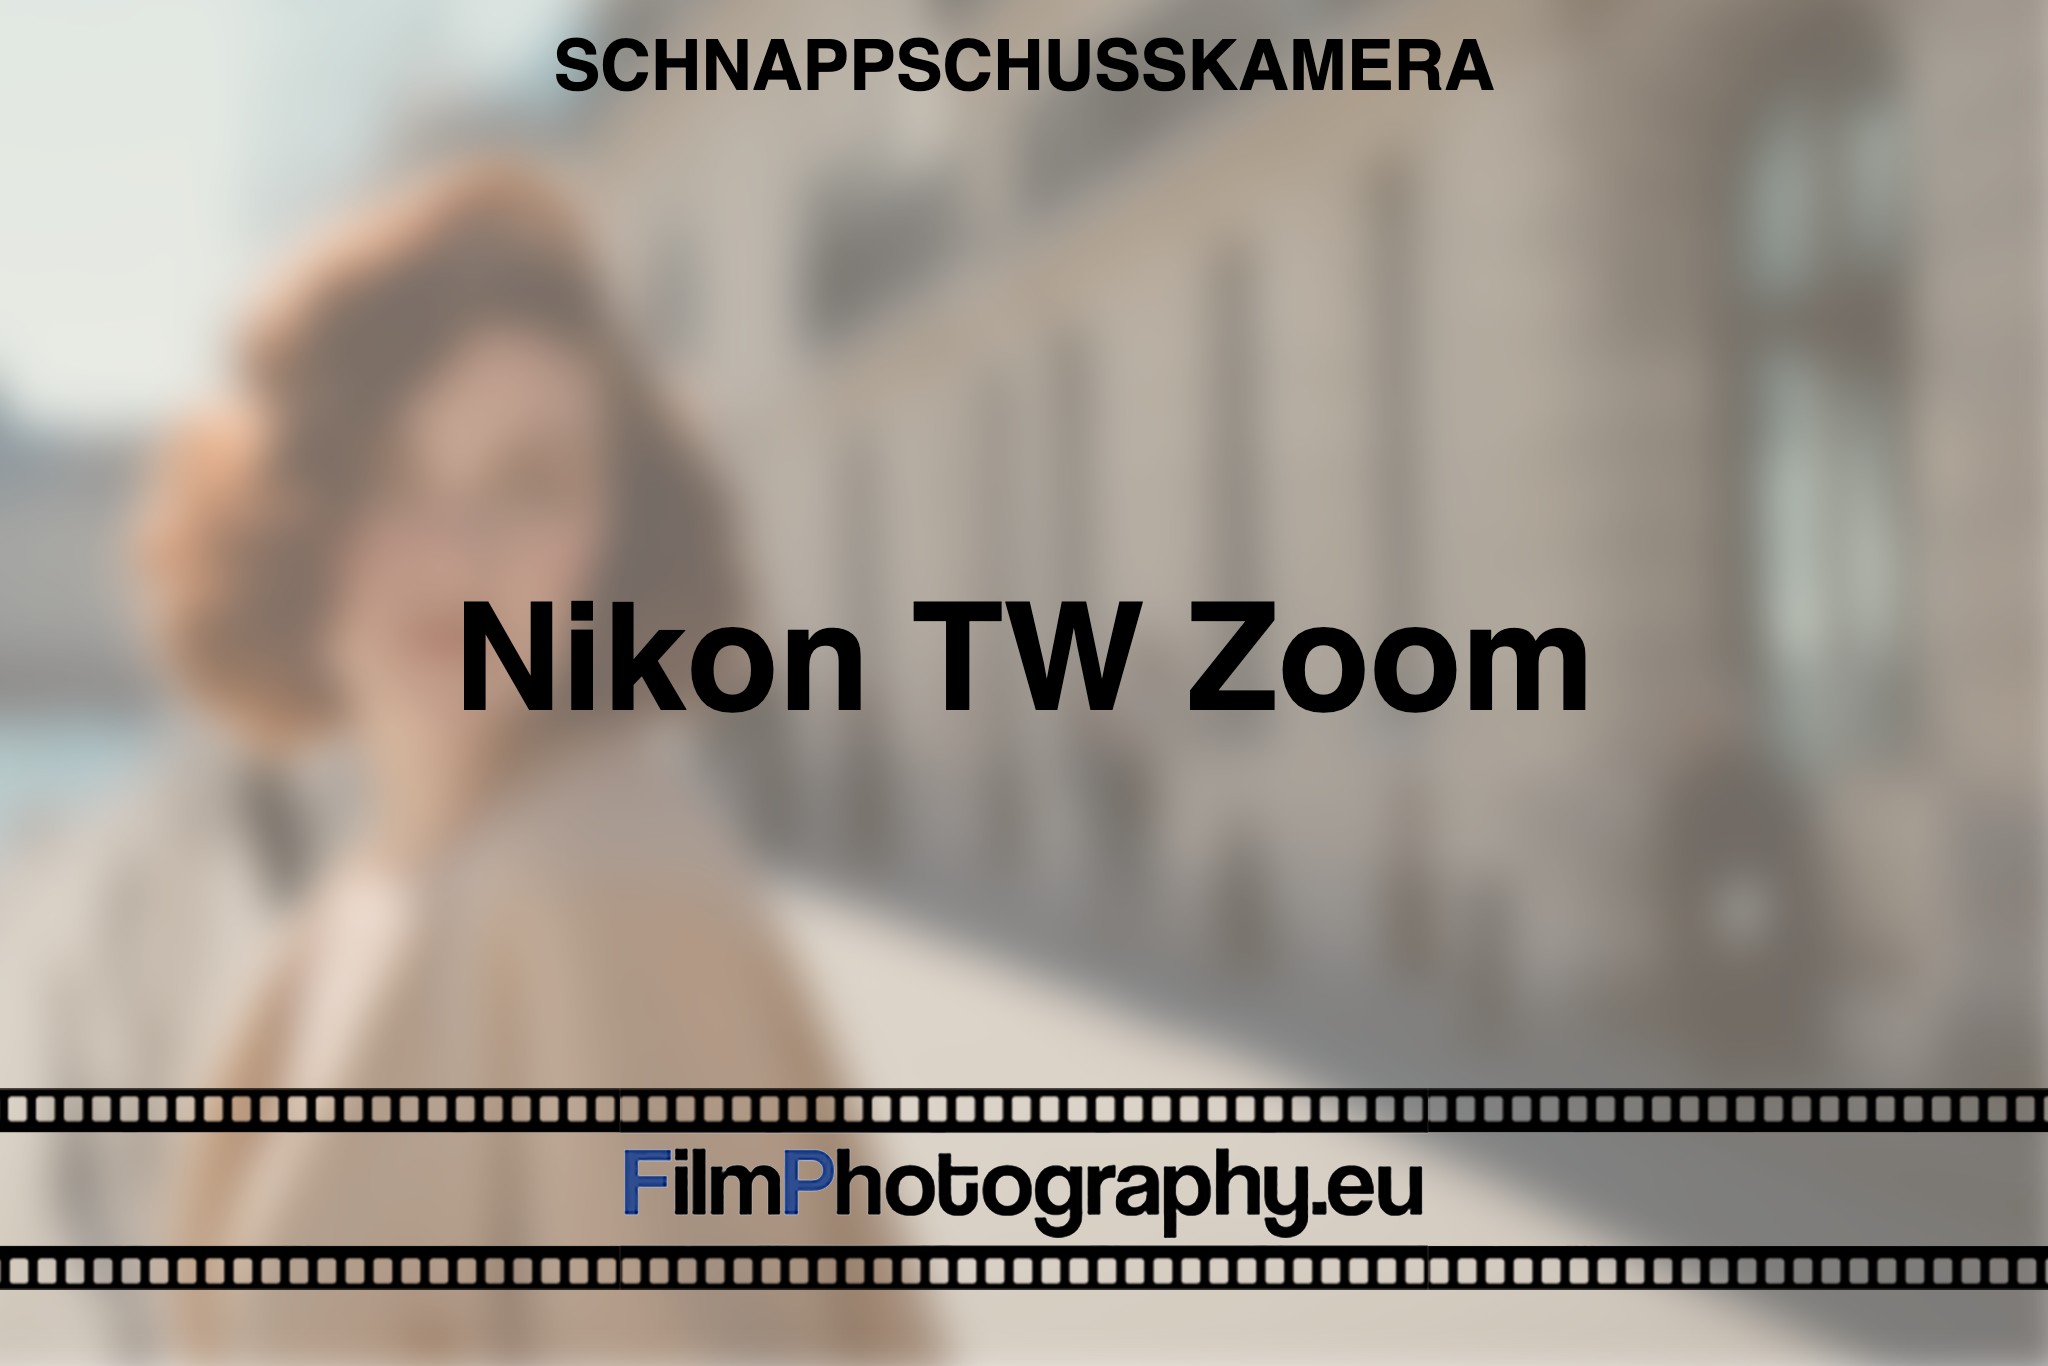 nikon-tw-zoom-schnappschusskamera-bnv